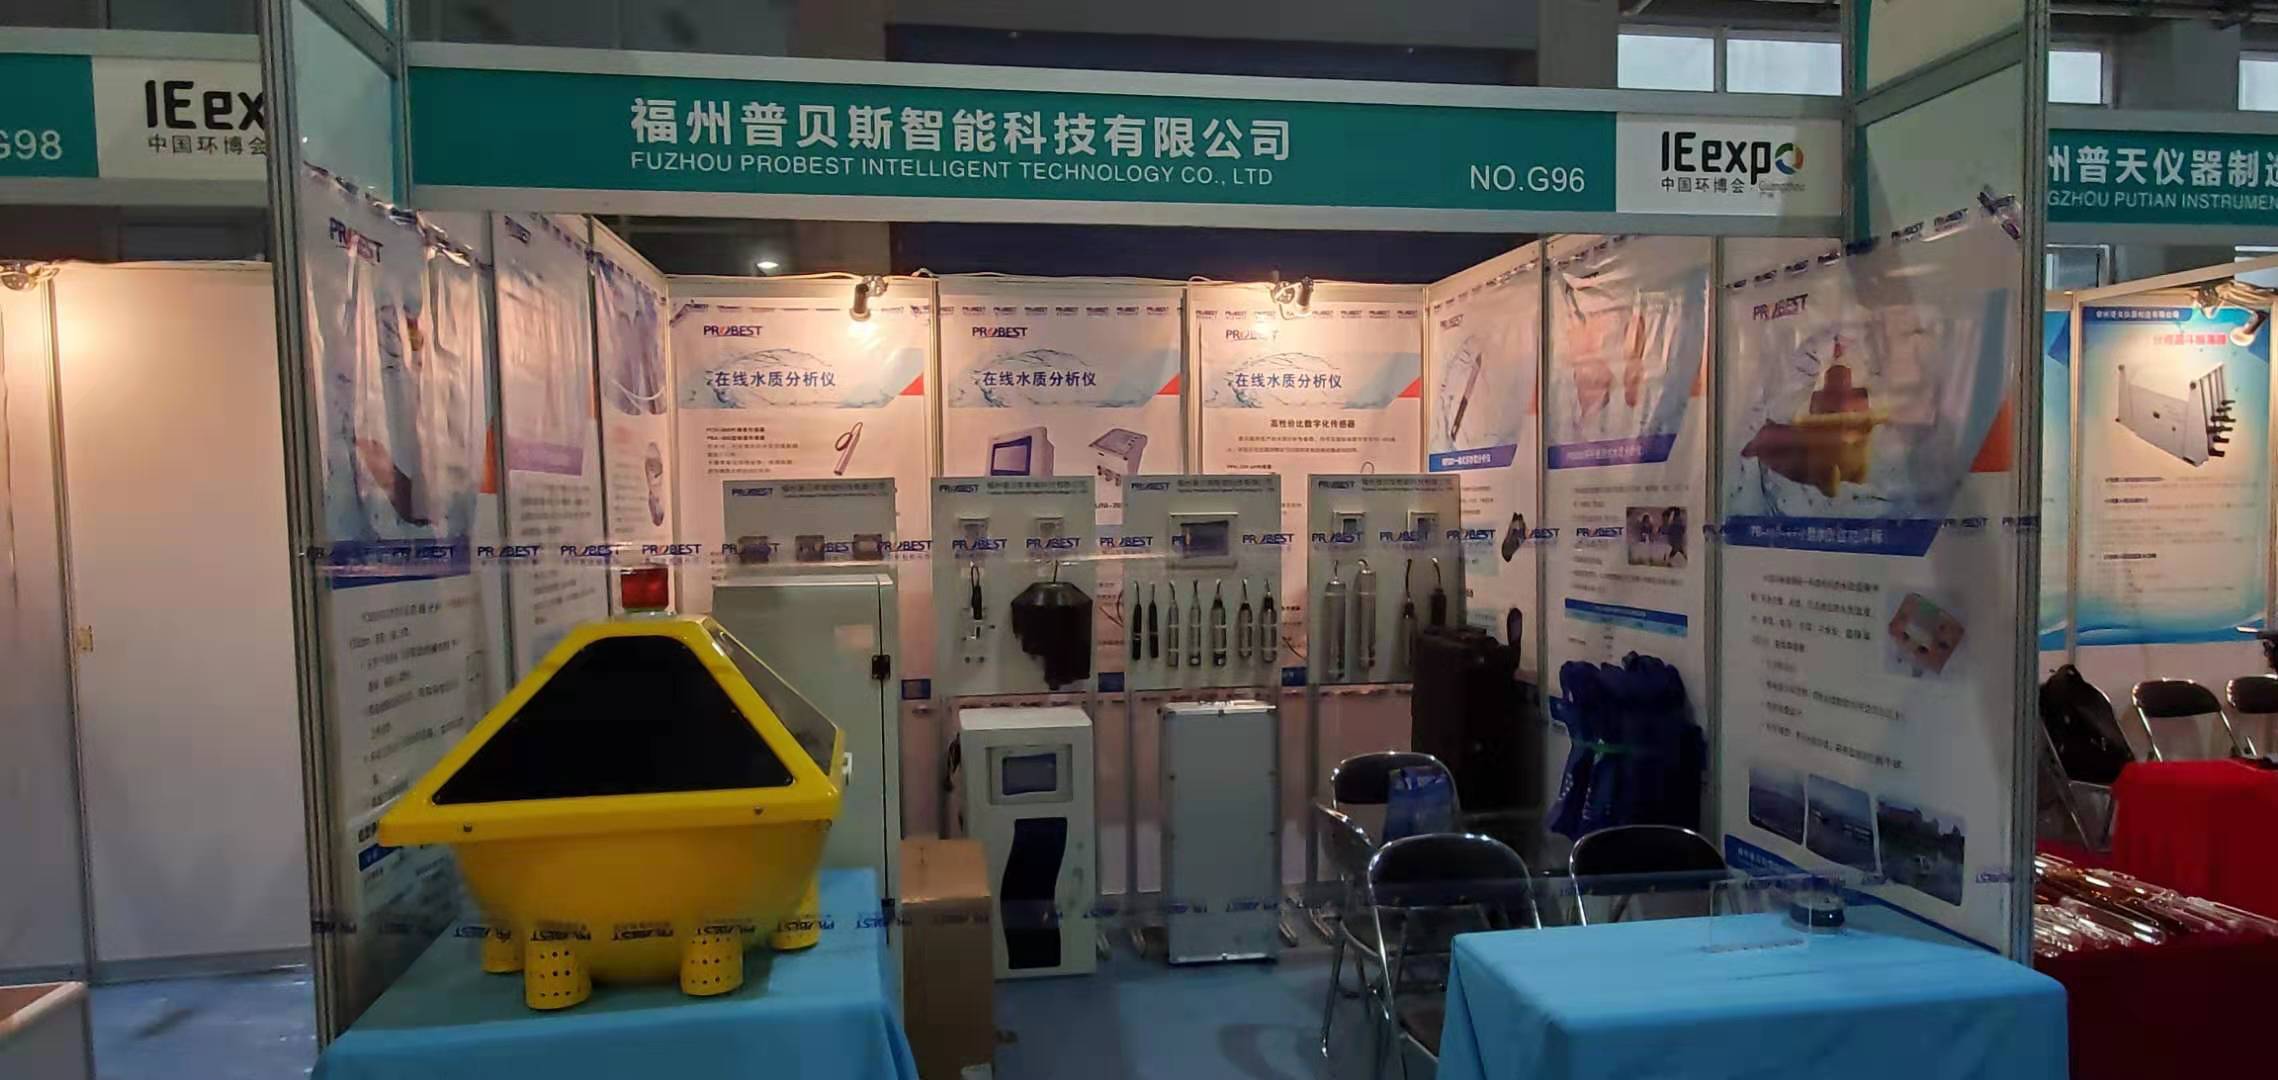 Fuzhou Probest participa en IE expo 2019